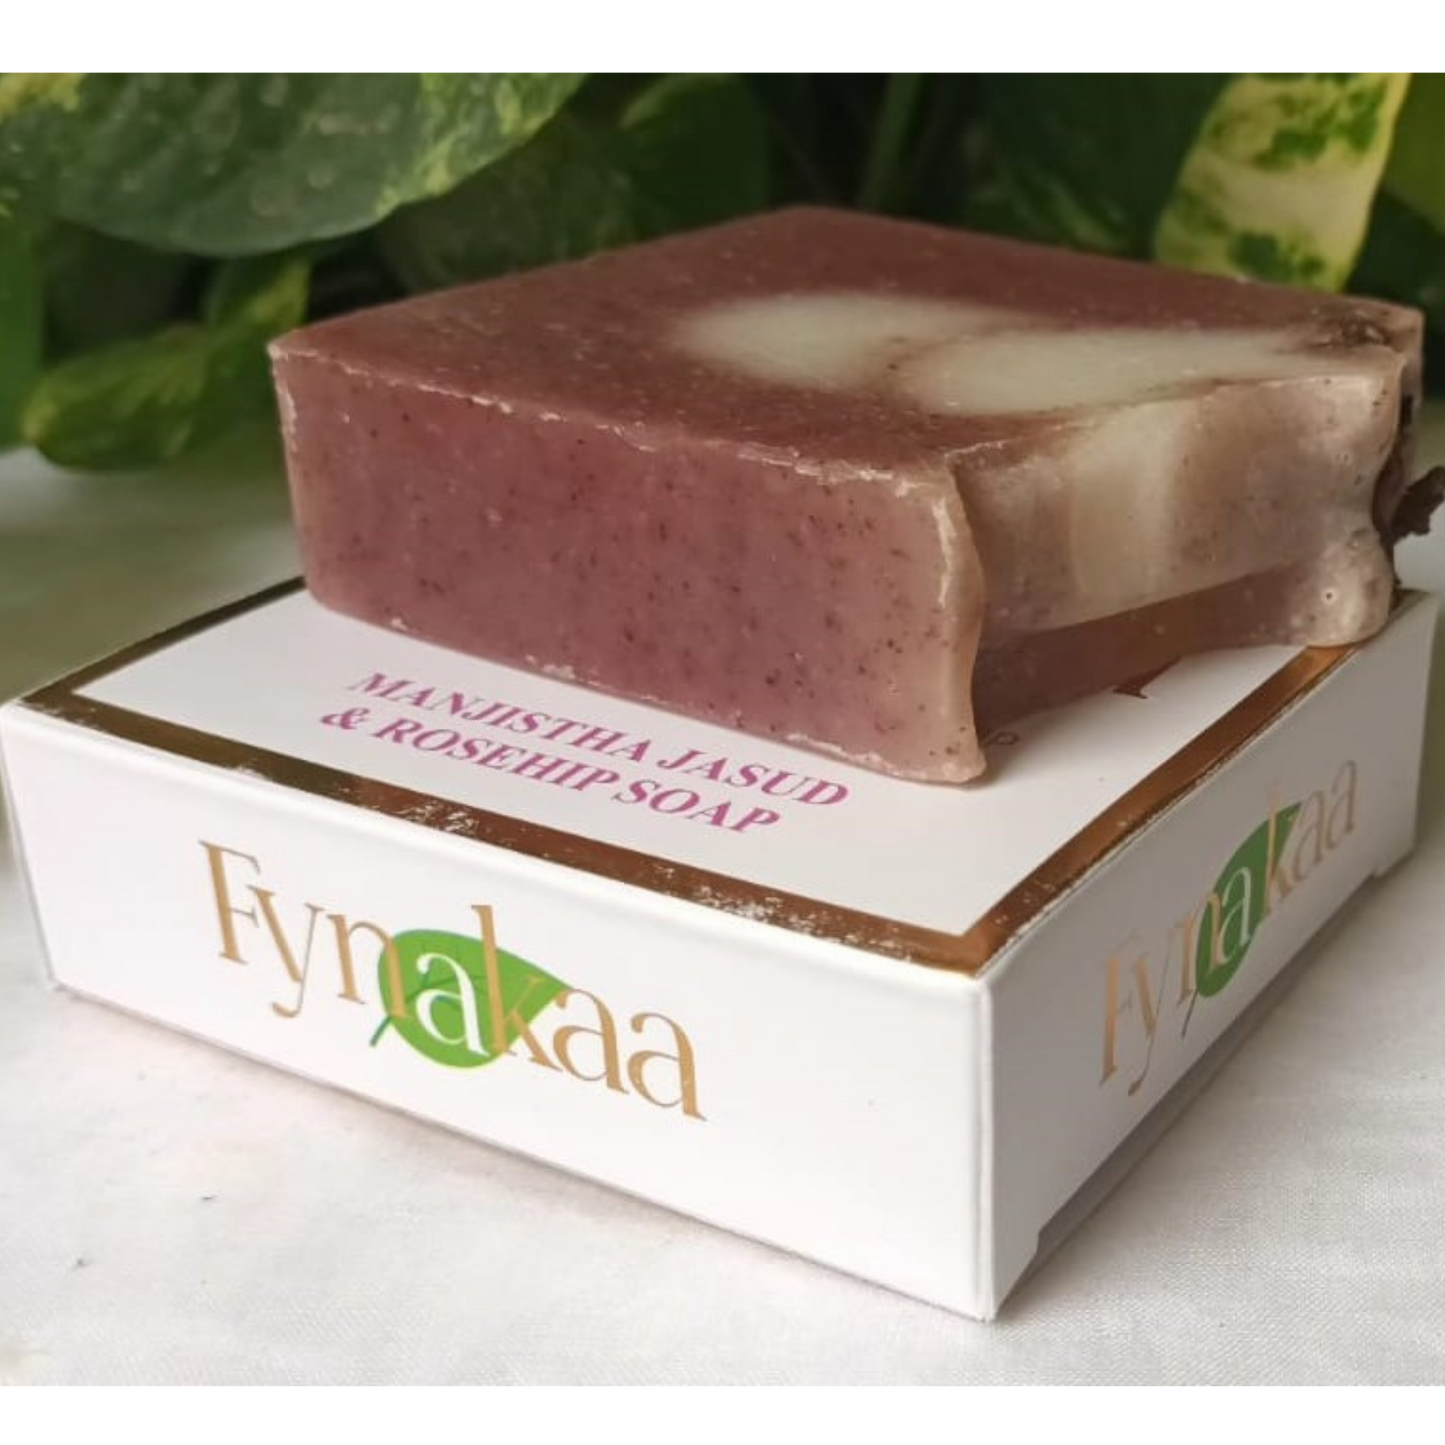 Manjistha Jasud Rosehip Cold Processed Handmade Natural Organic Premium soap